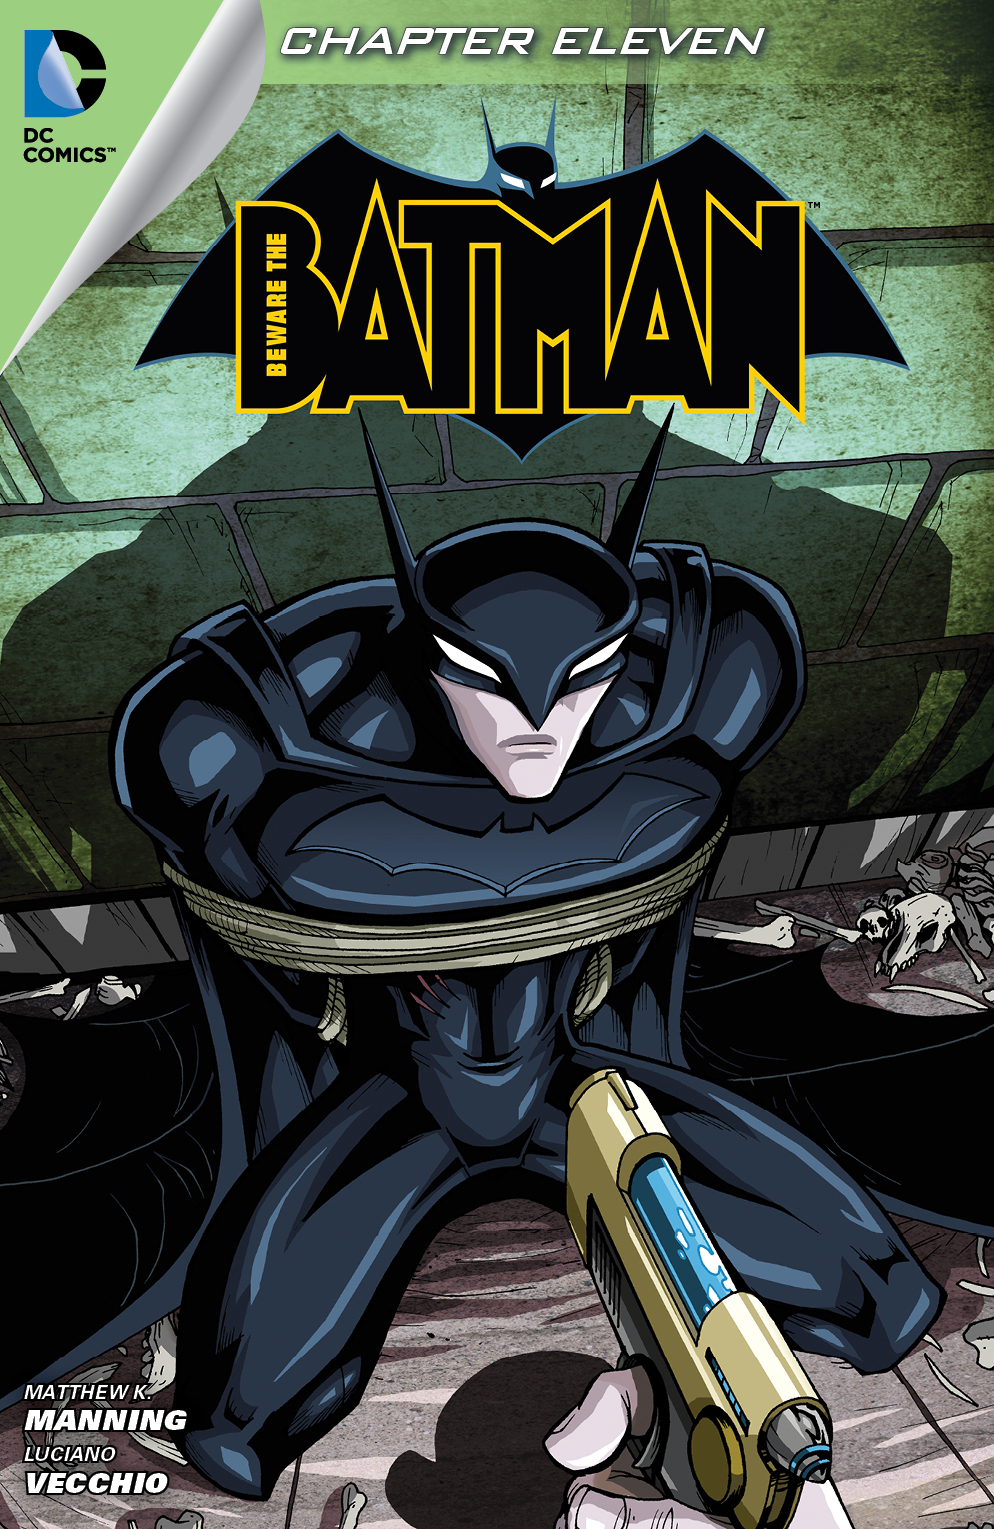 Beware The Batman #11 preview images